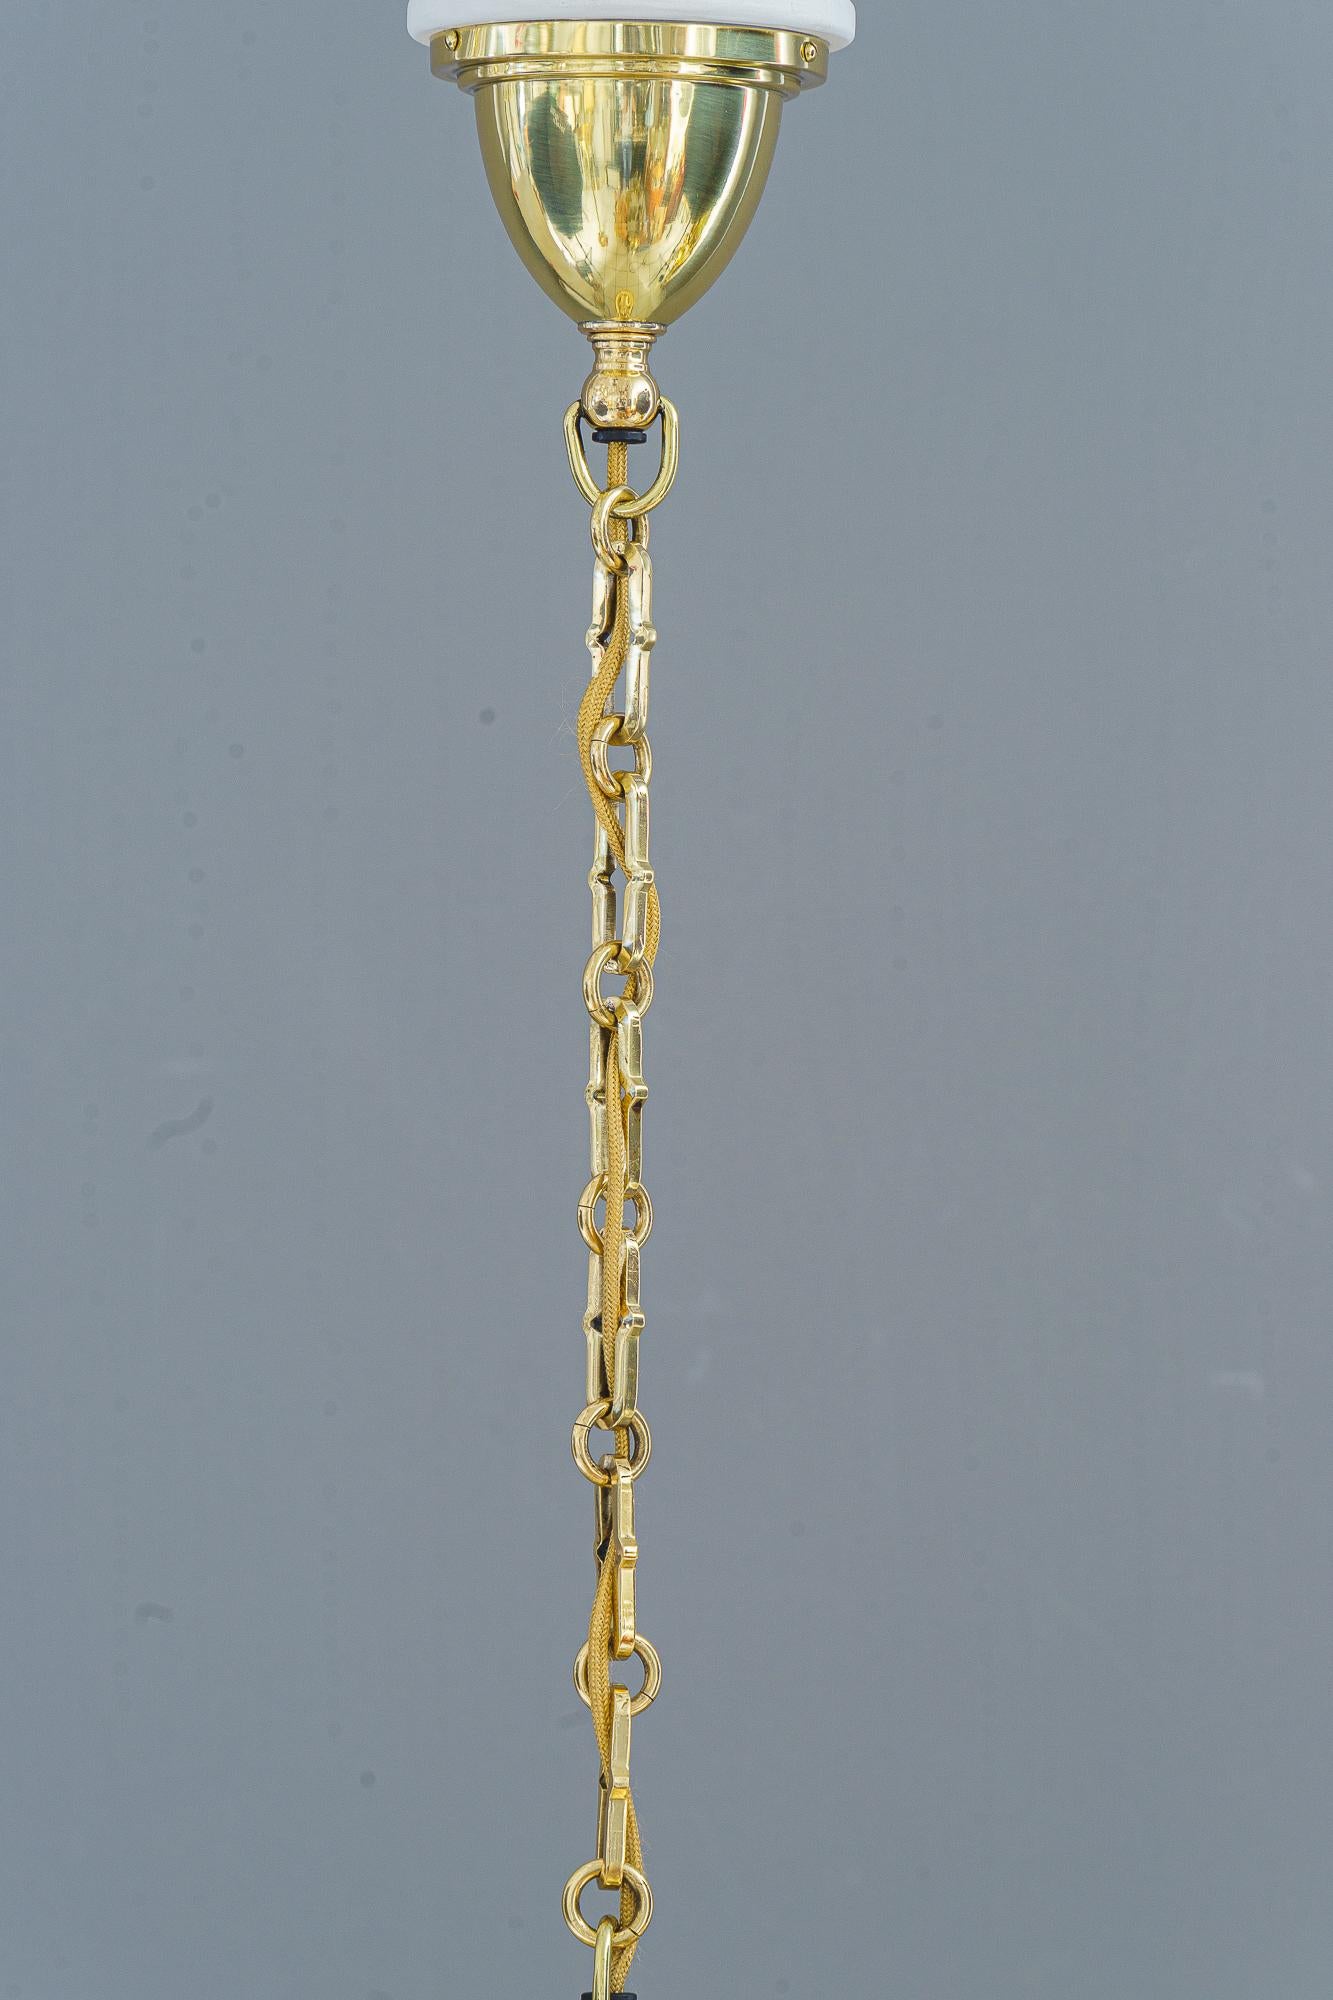 Lacquered Art Deco pendant vienna with original antique cut glass shade around 1920s